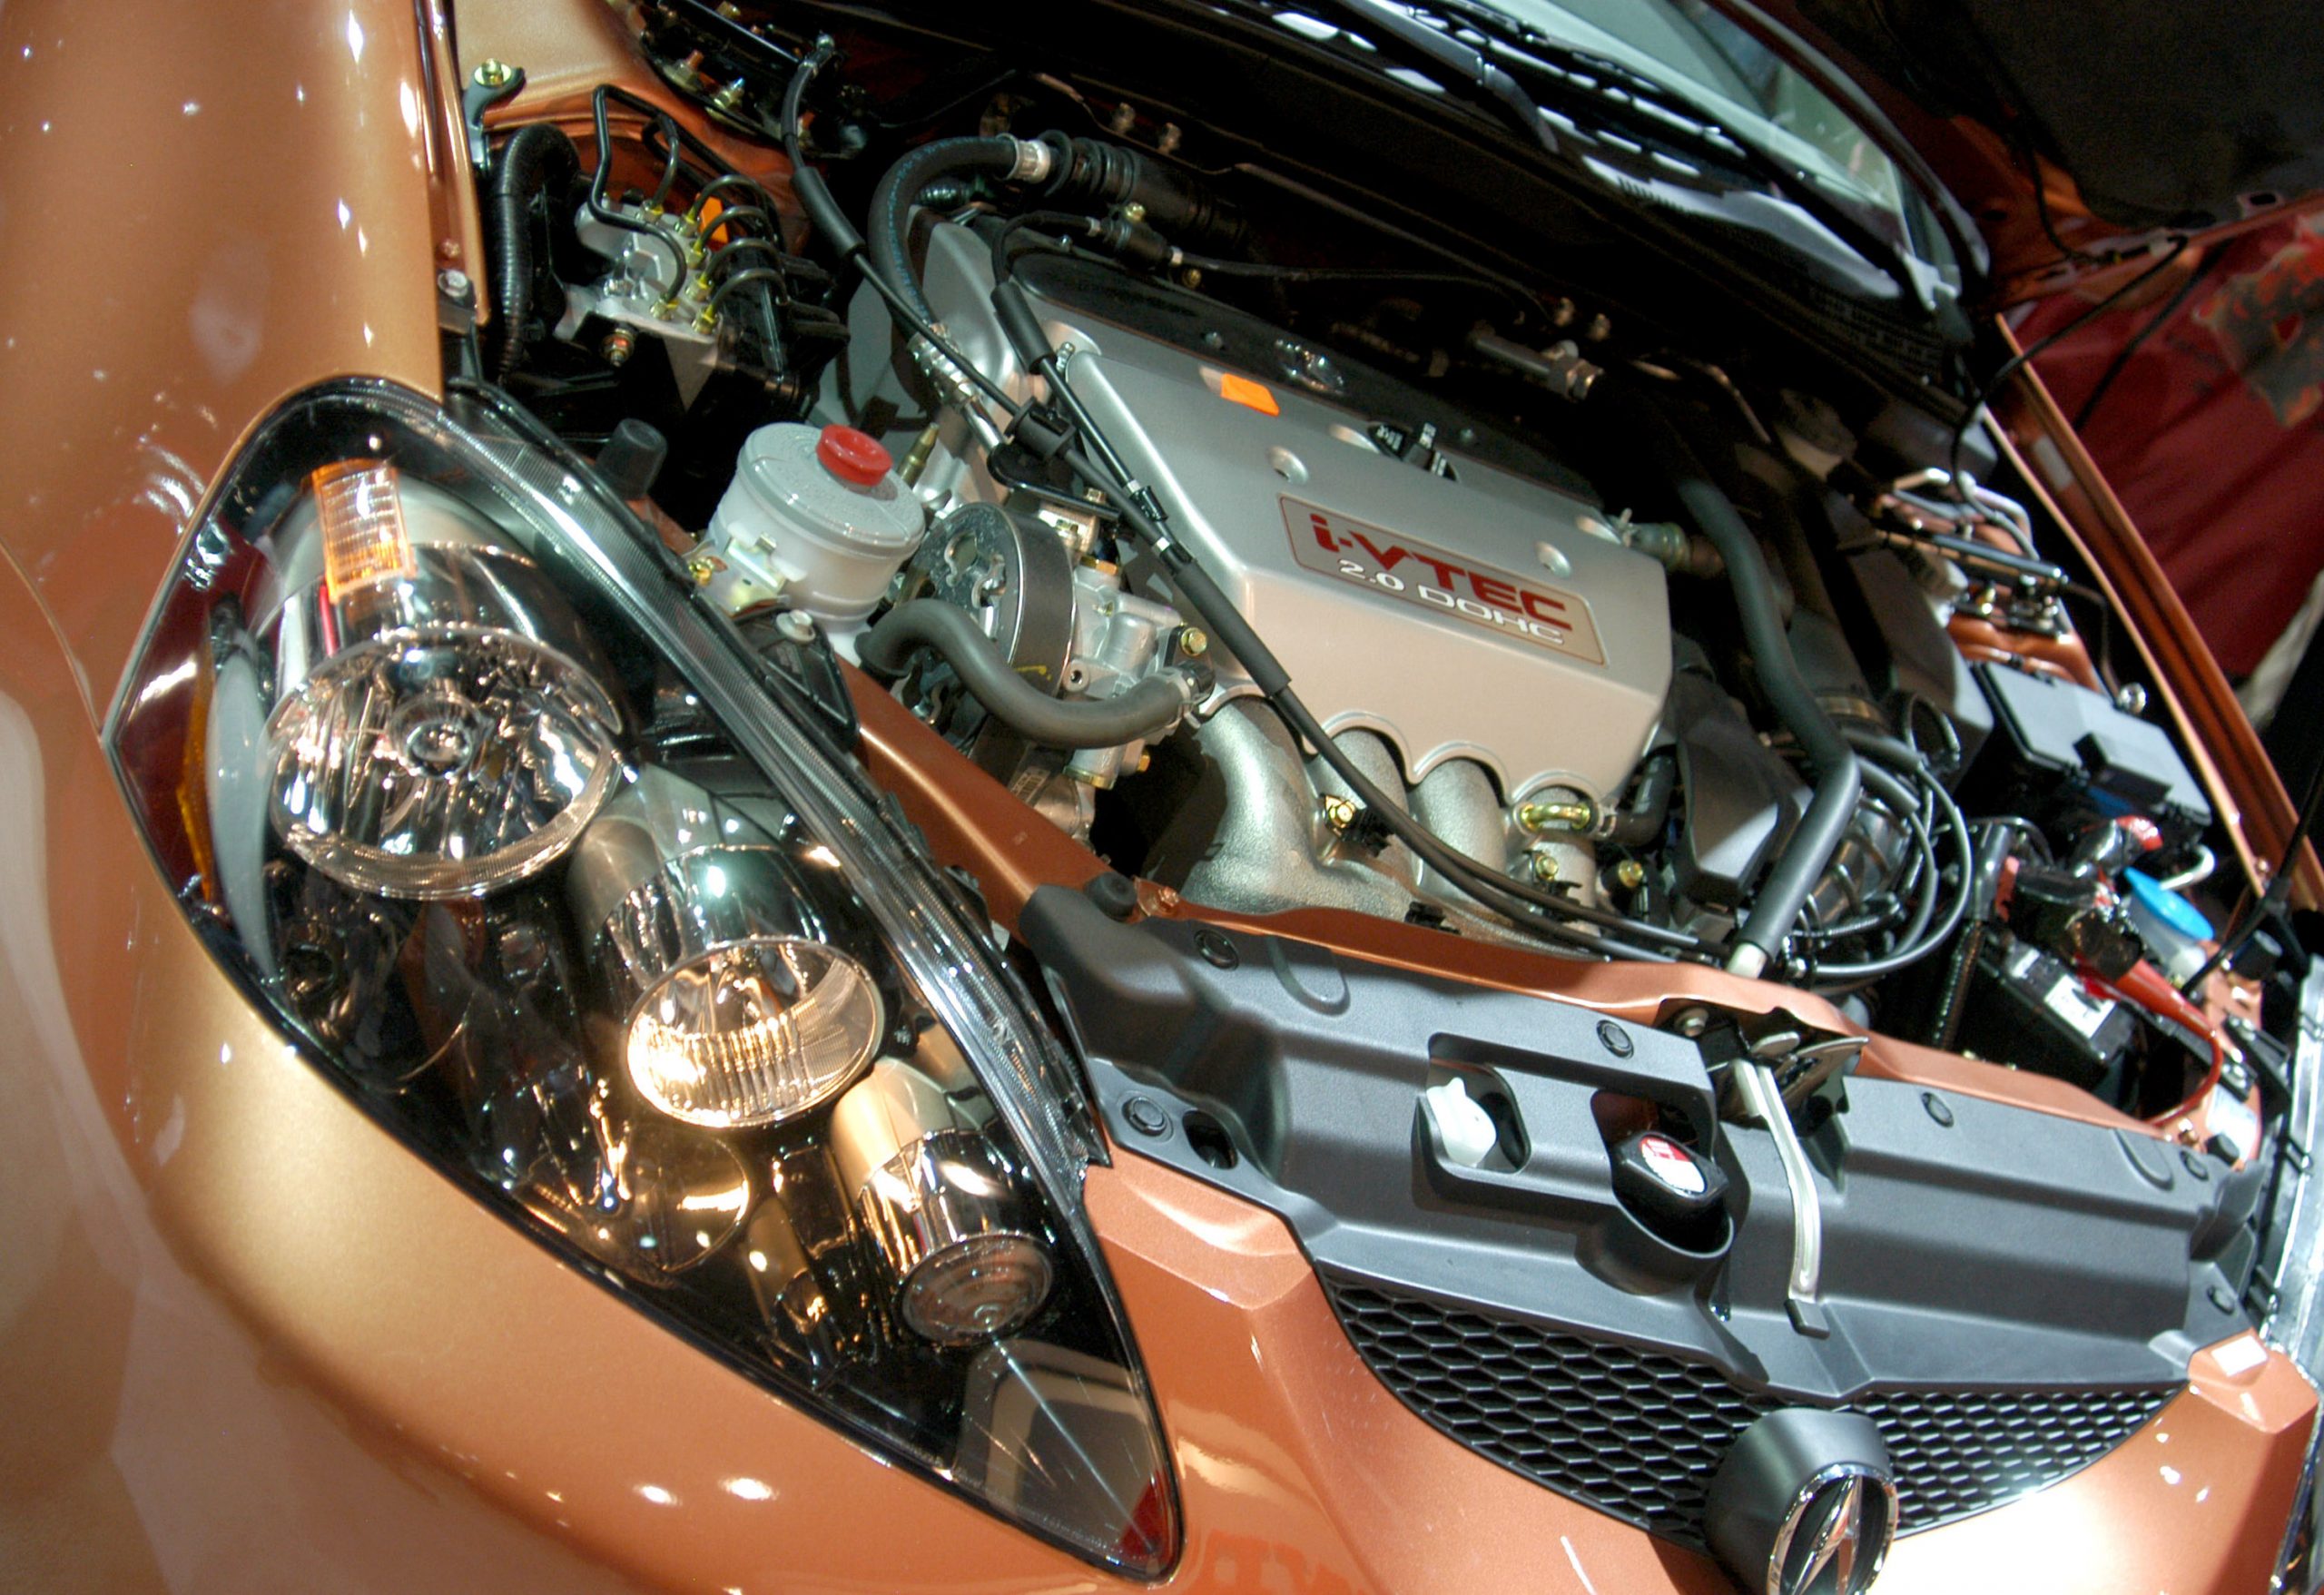 The K20 Honda motor in the Acura RSX Type S